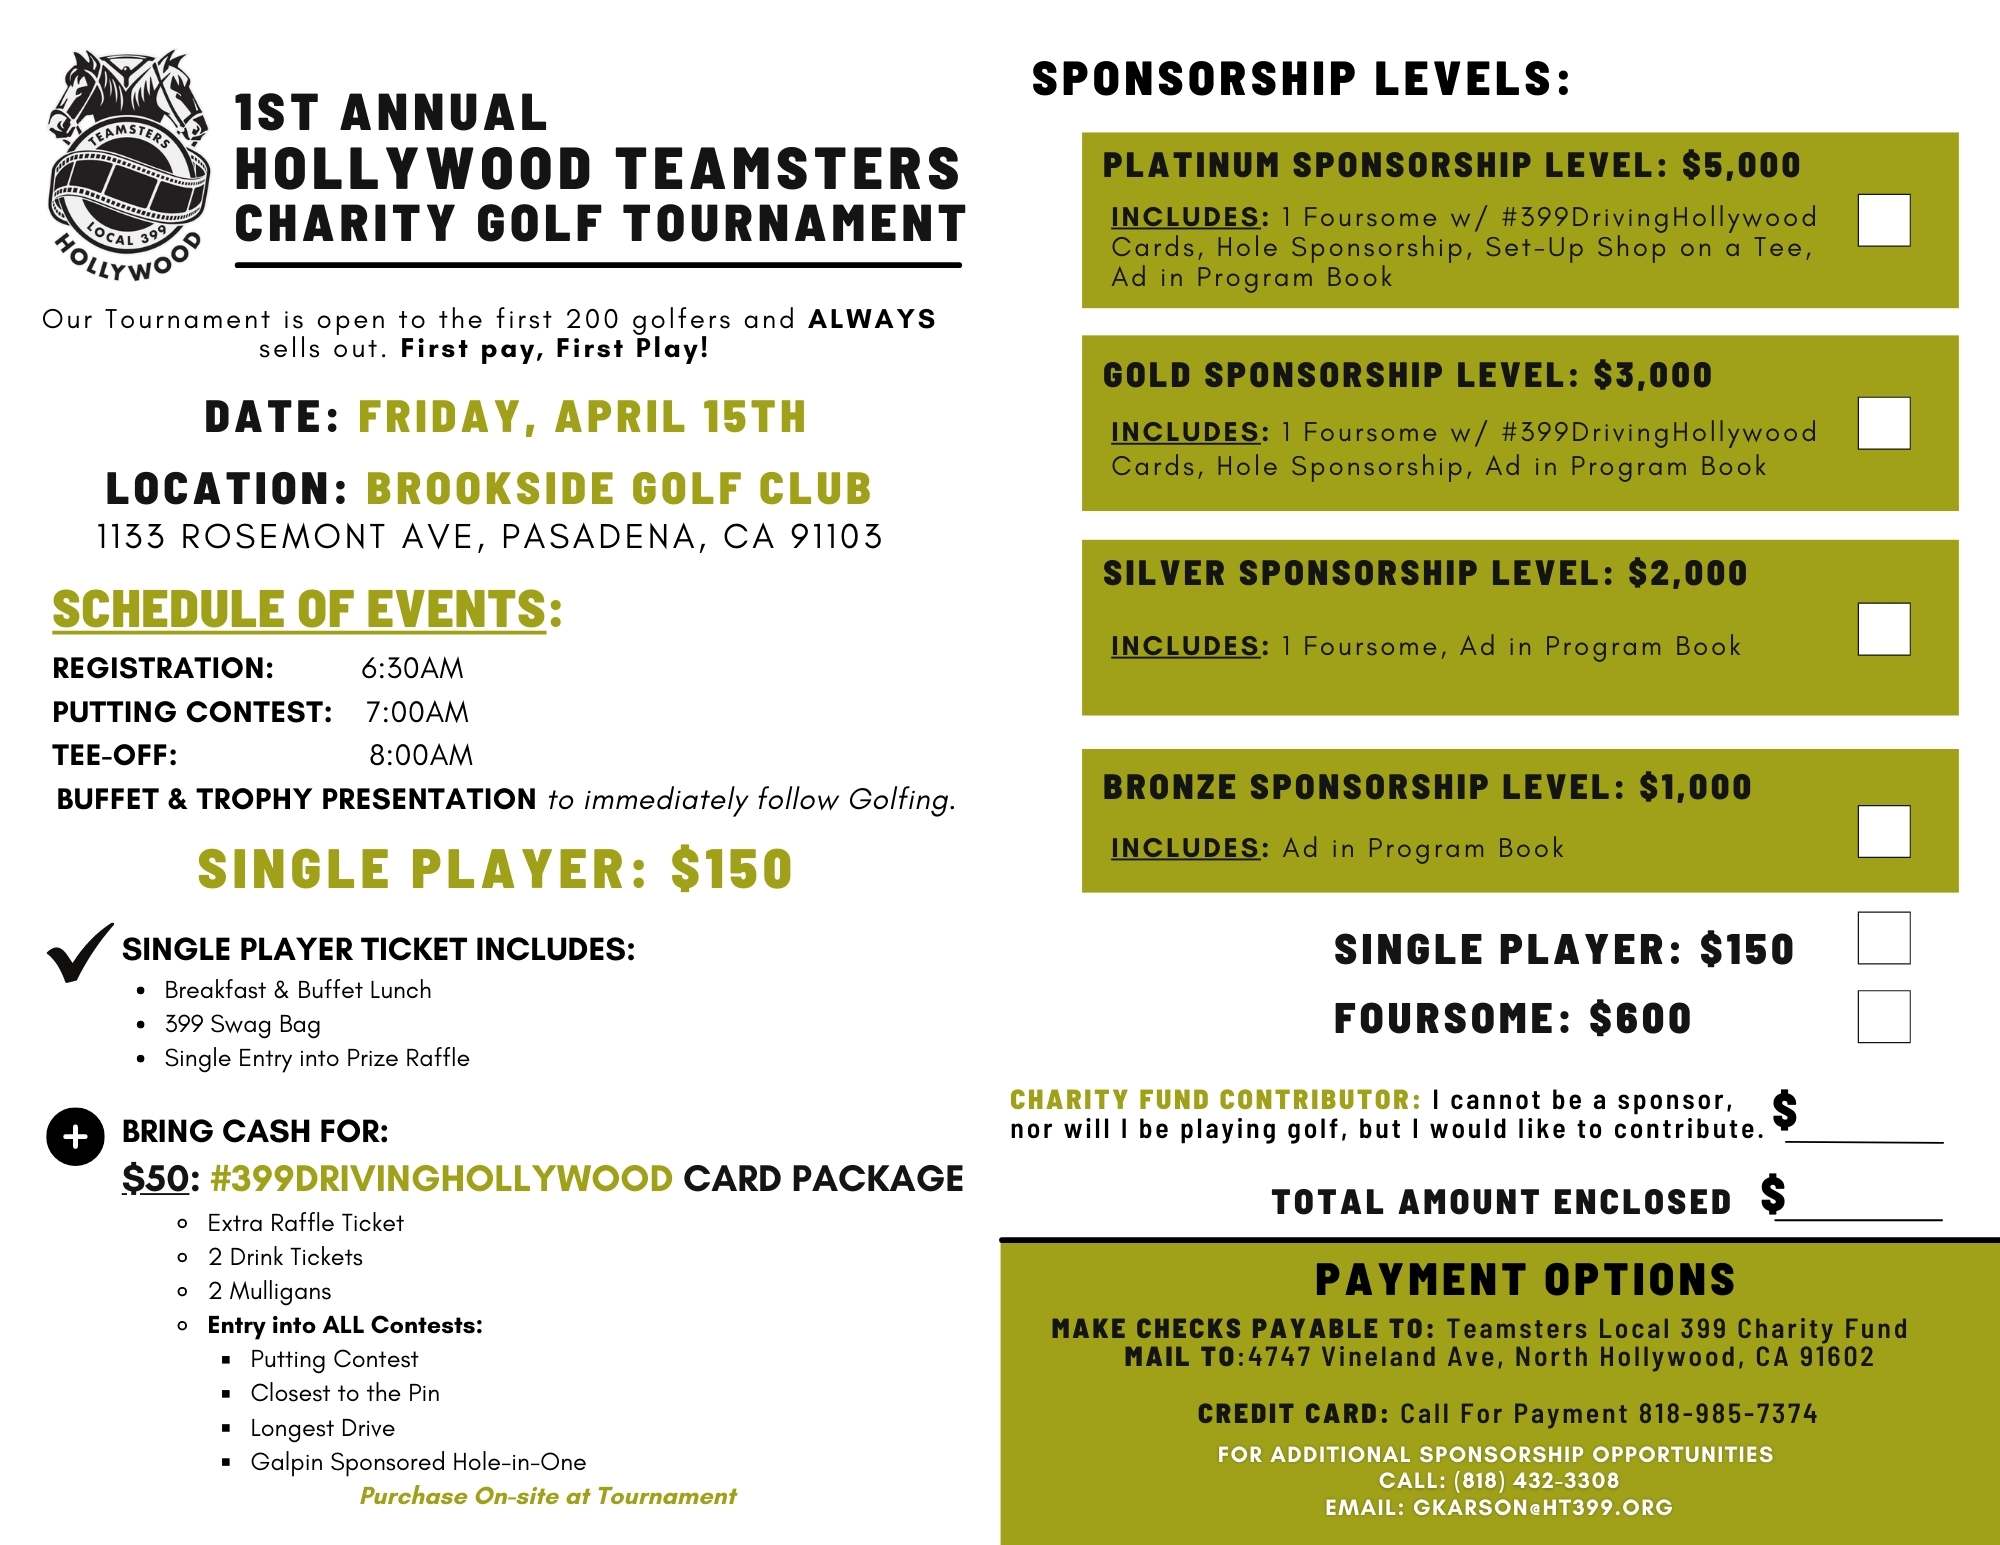 Registration Now open for Bountyland chartiy golf tournament